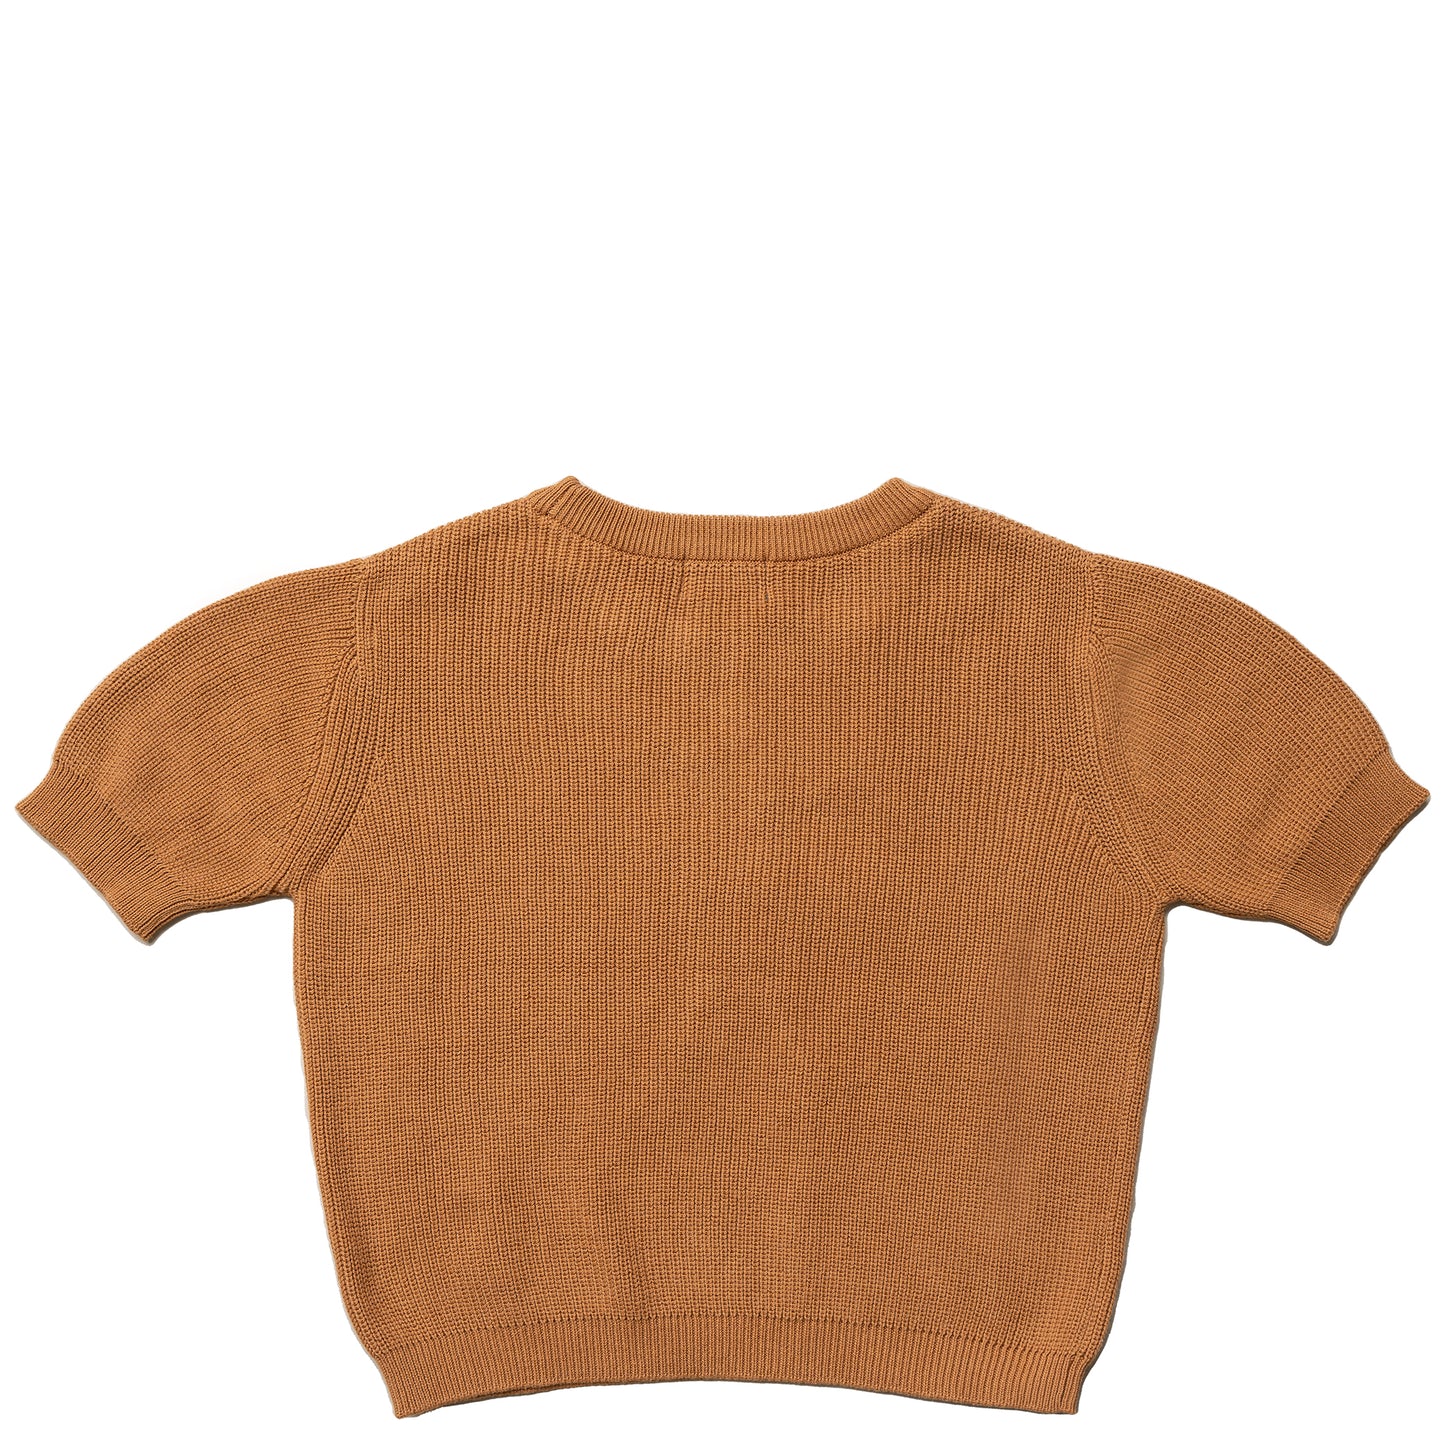 Hanevild - Hanevild t-shirt - Golden brown